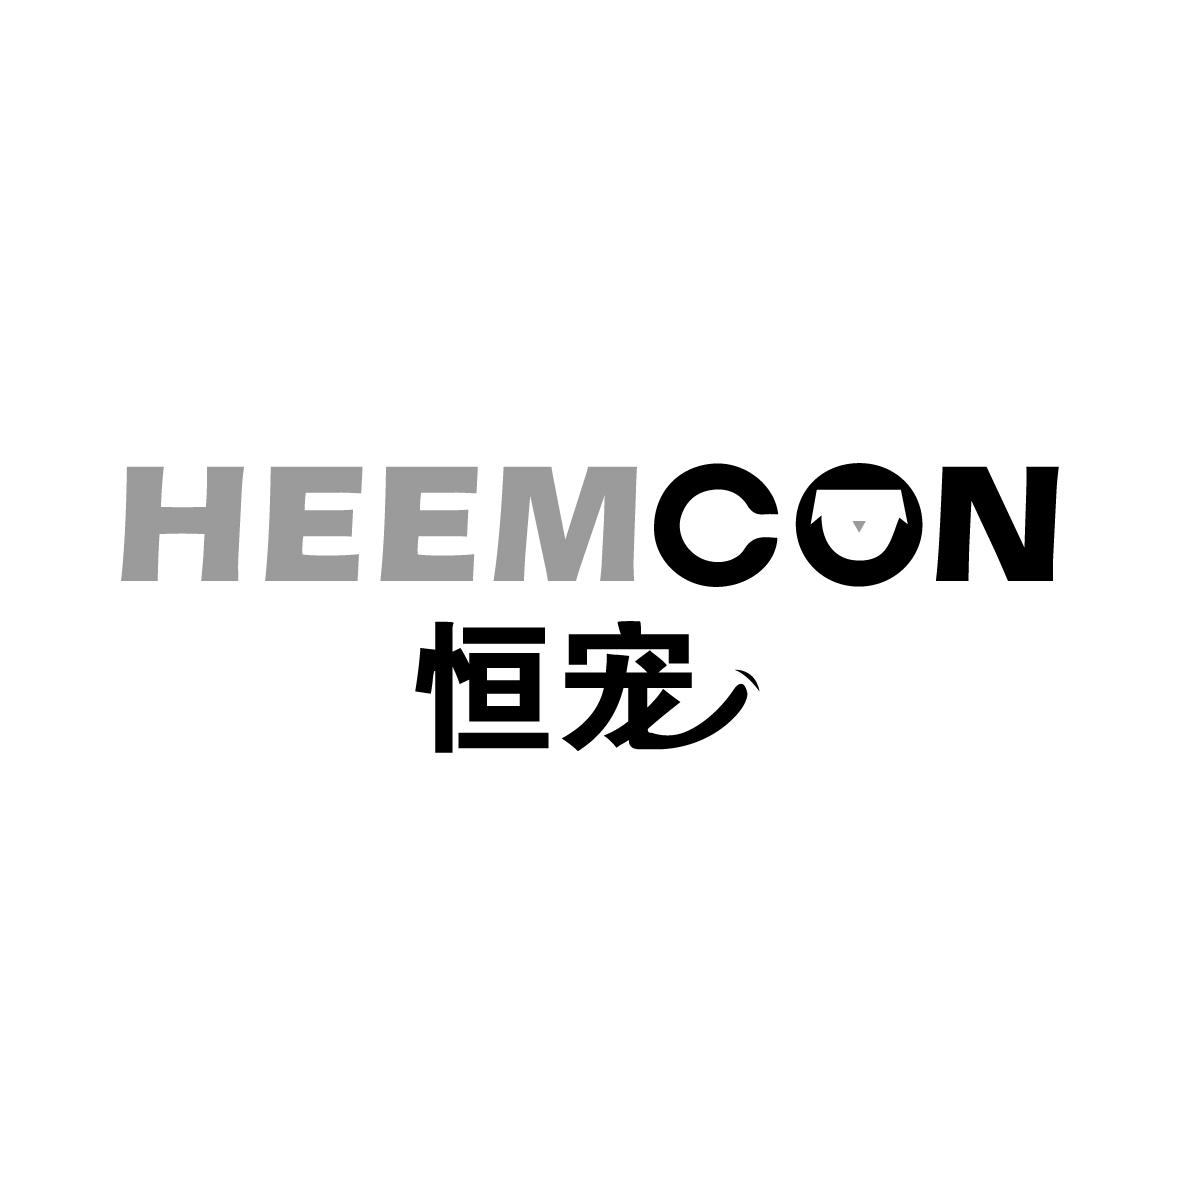  HEEMCON